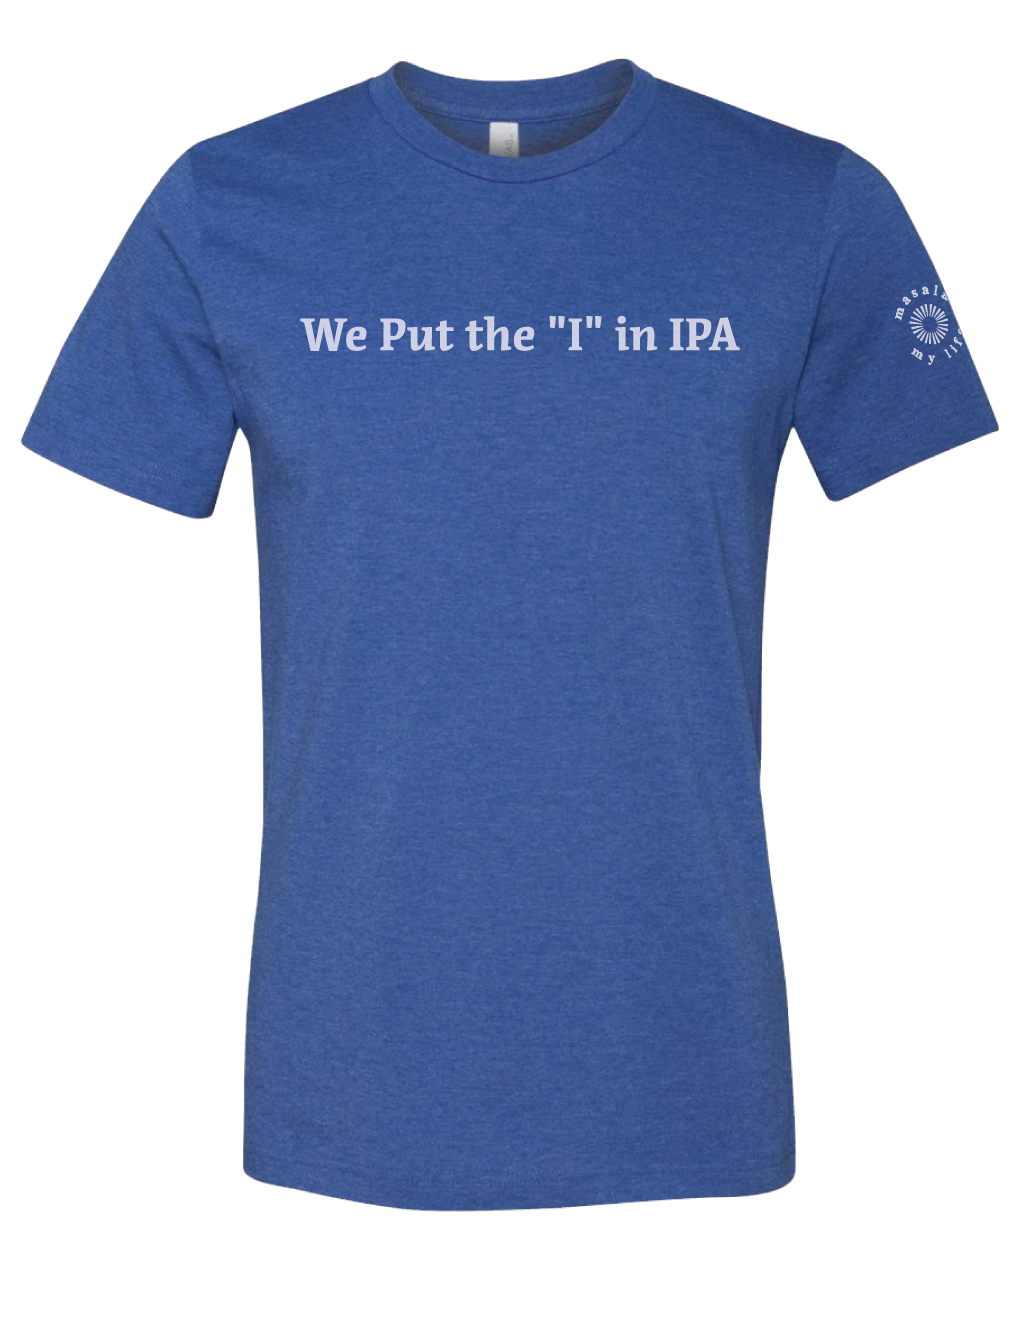 We Put the "I" in IPA Tee (Royal Blue Heather) - Masala My Life